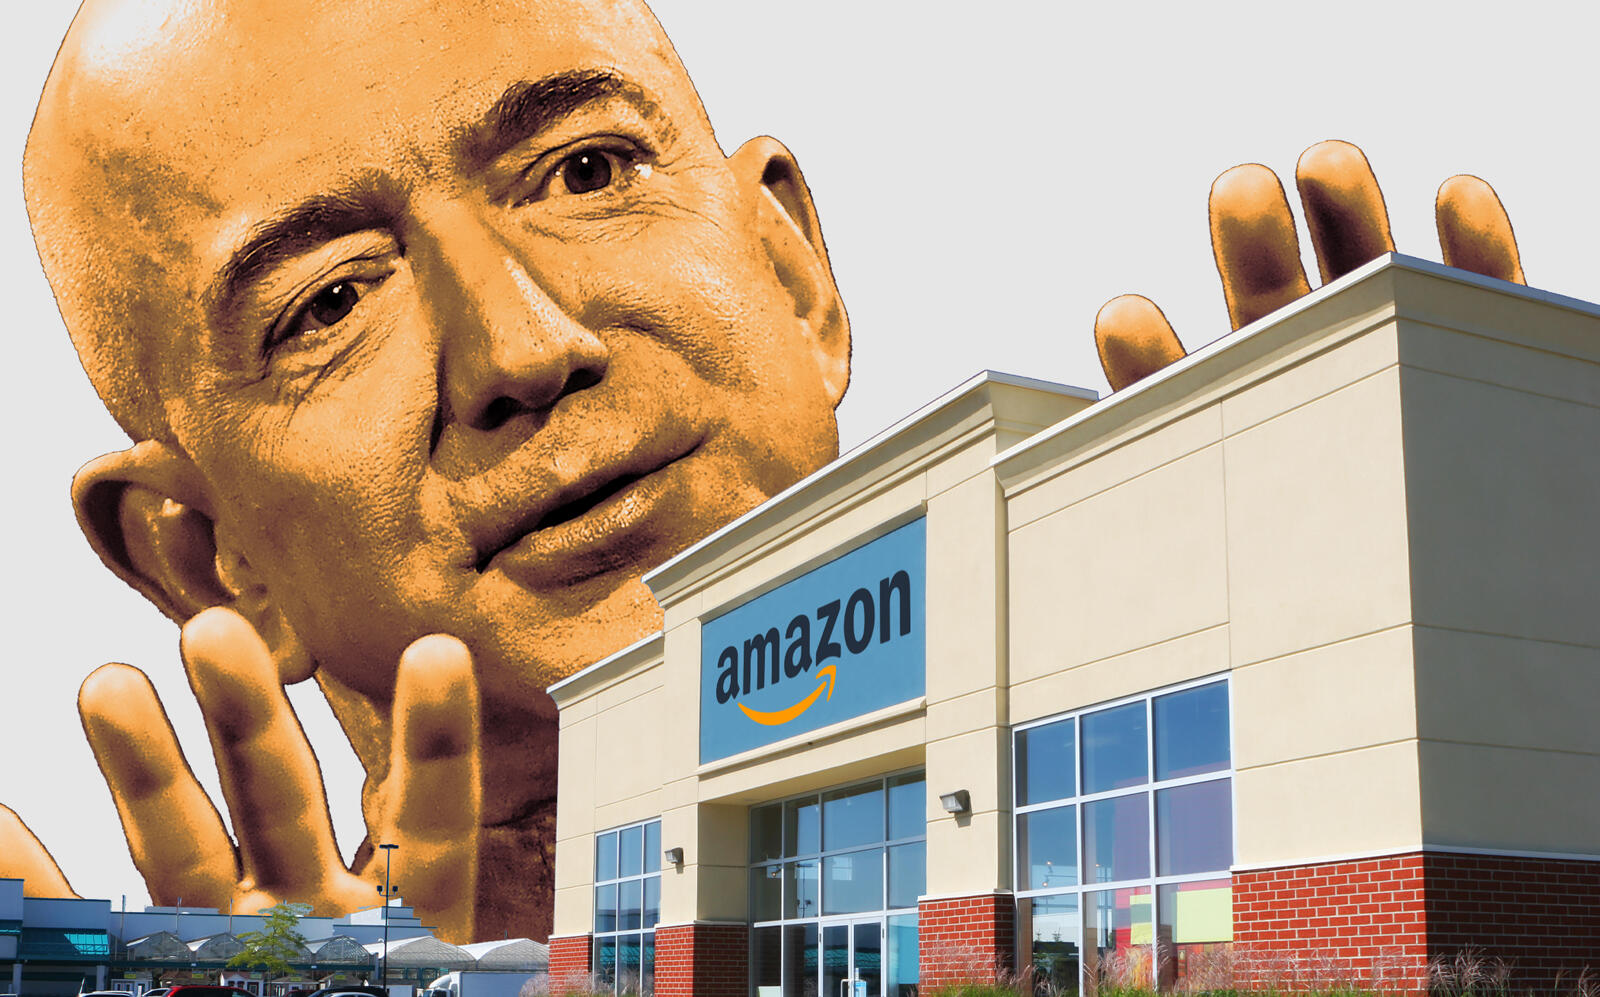 Amazon CEO Jeff Bezos (Getty, iStock)